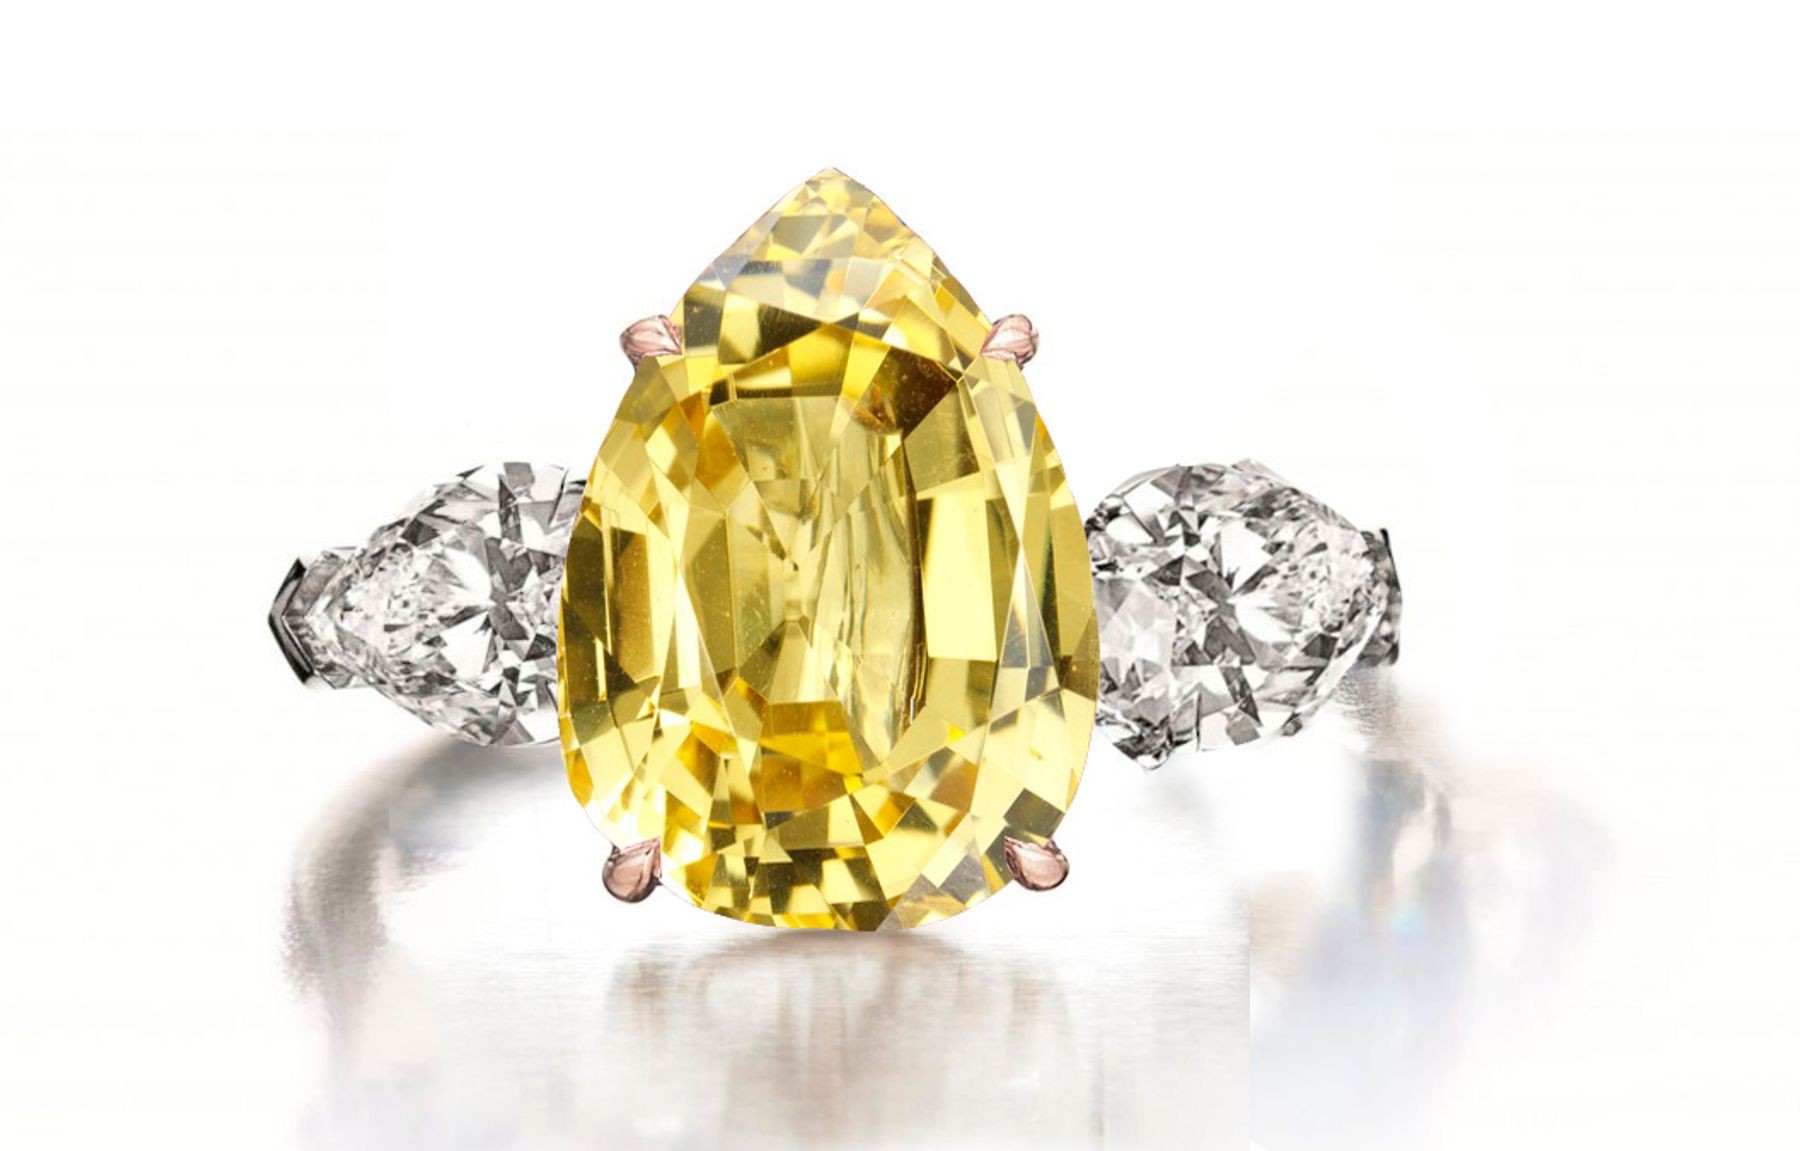 Custom Manufactured Three Stone Pear-Shaped Diamonds & Yellow Sapphire Ring